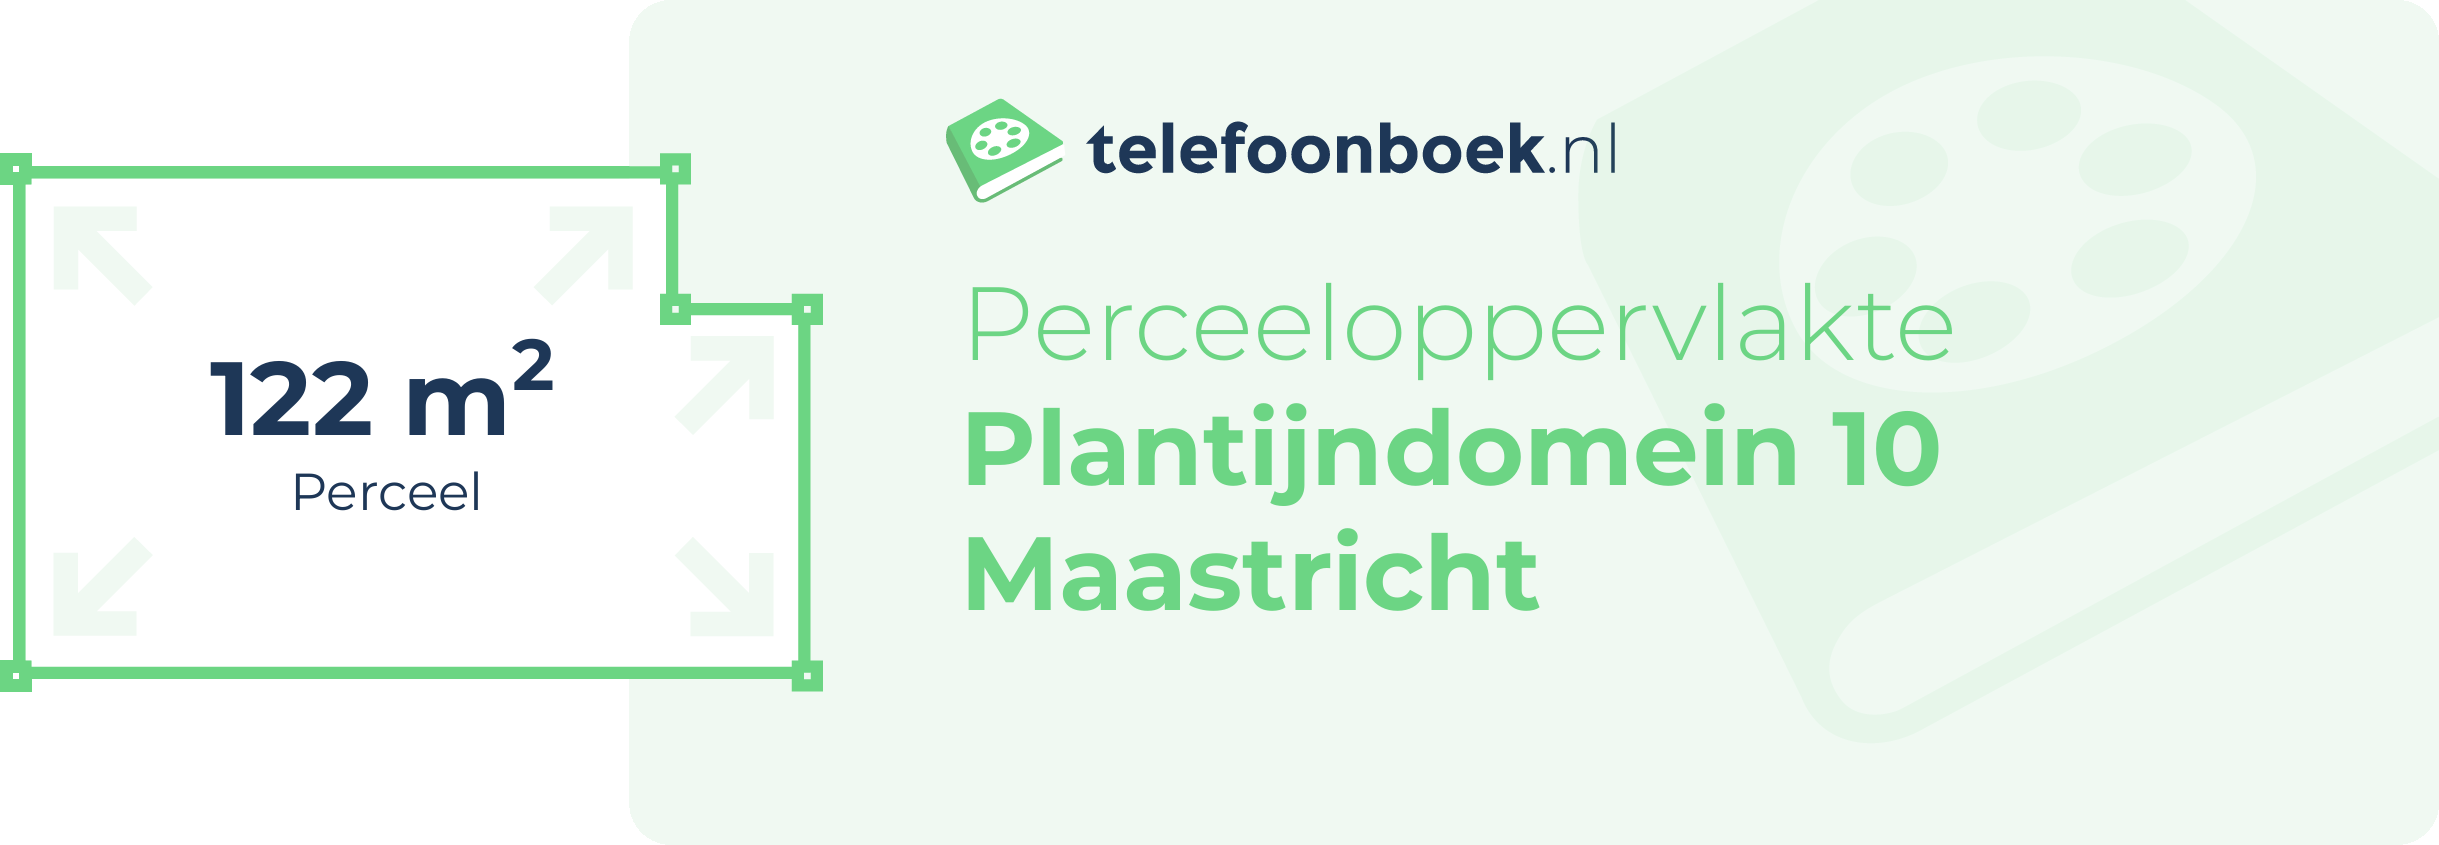 Perceeloppervlakte Plantijndomein 10 Maastricht